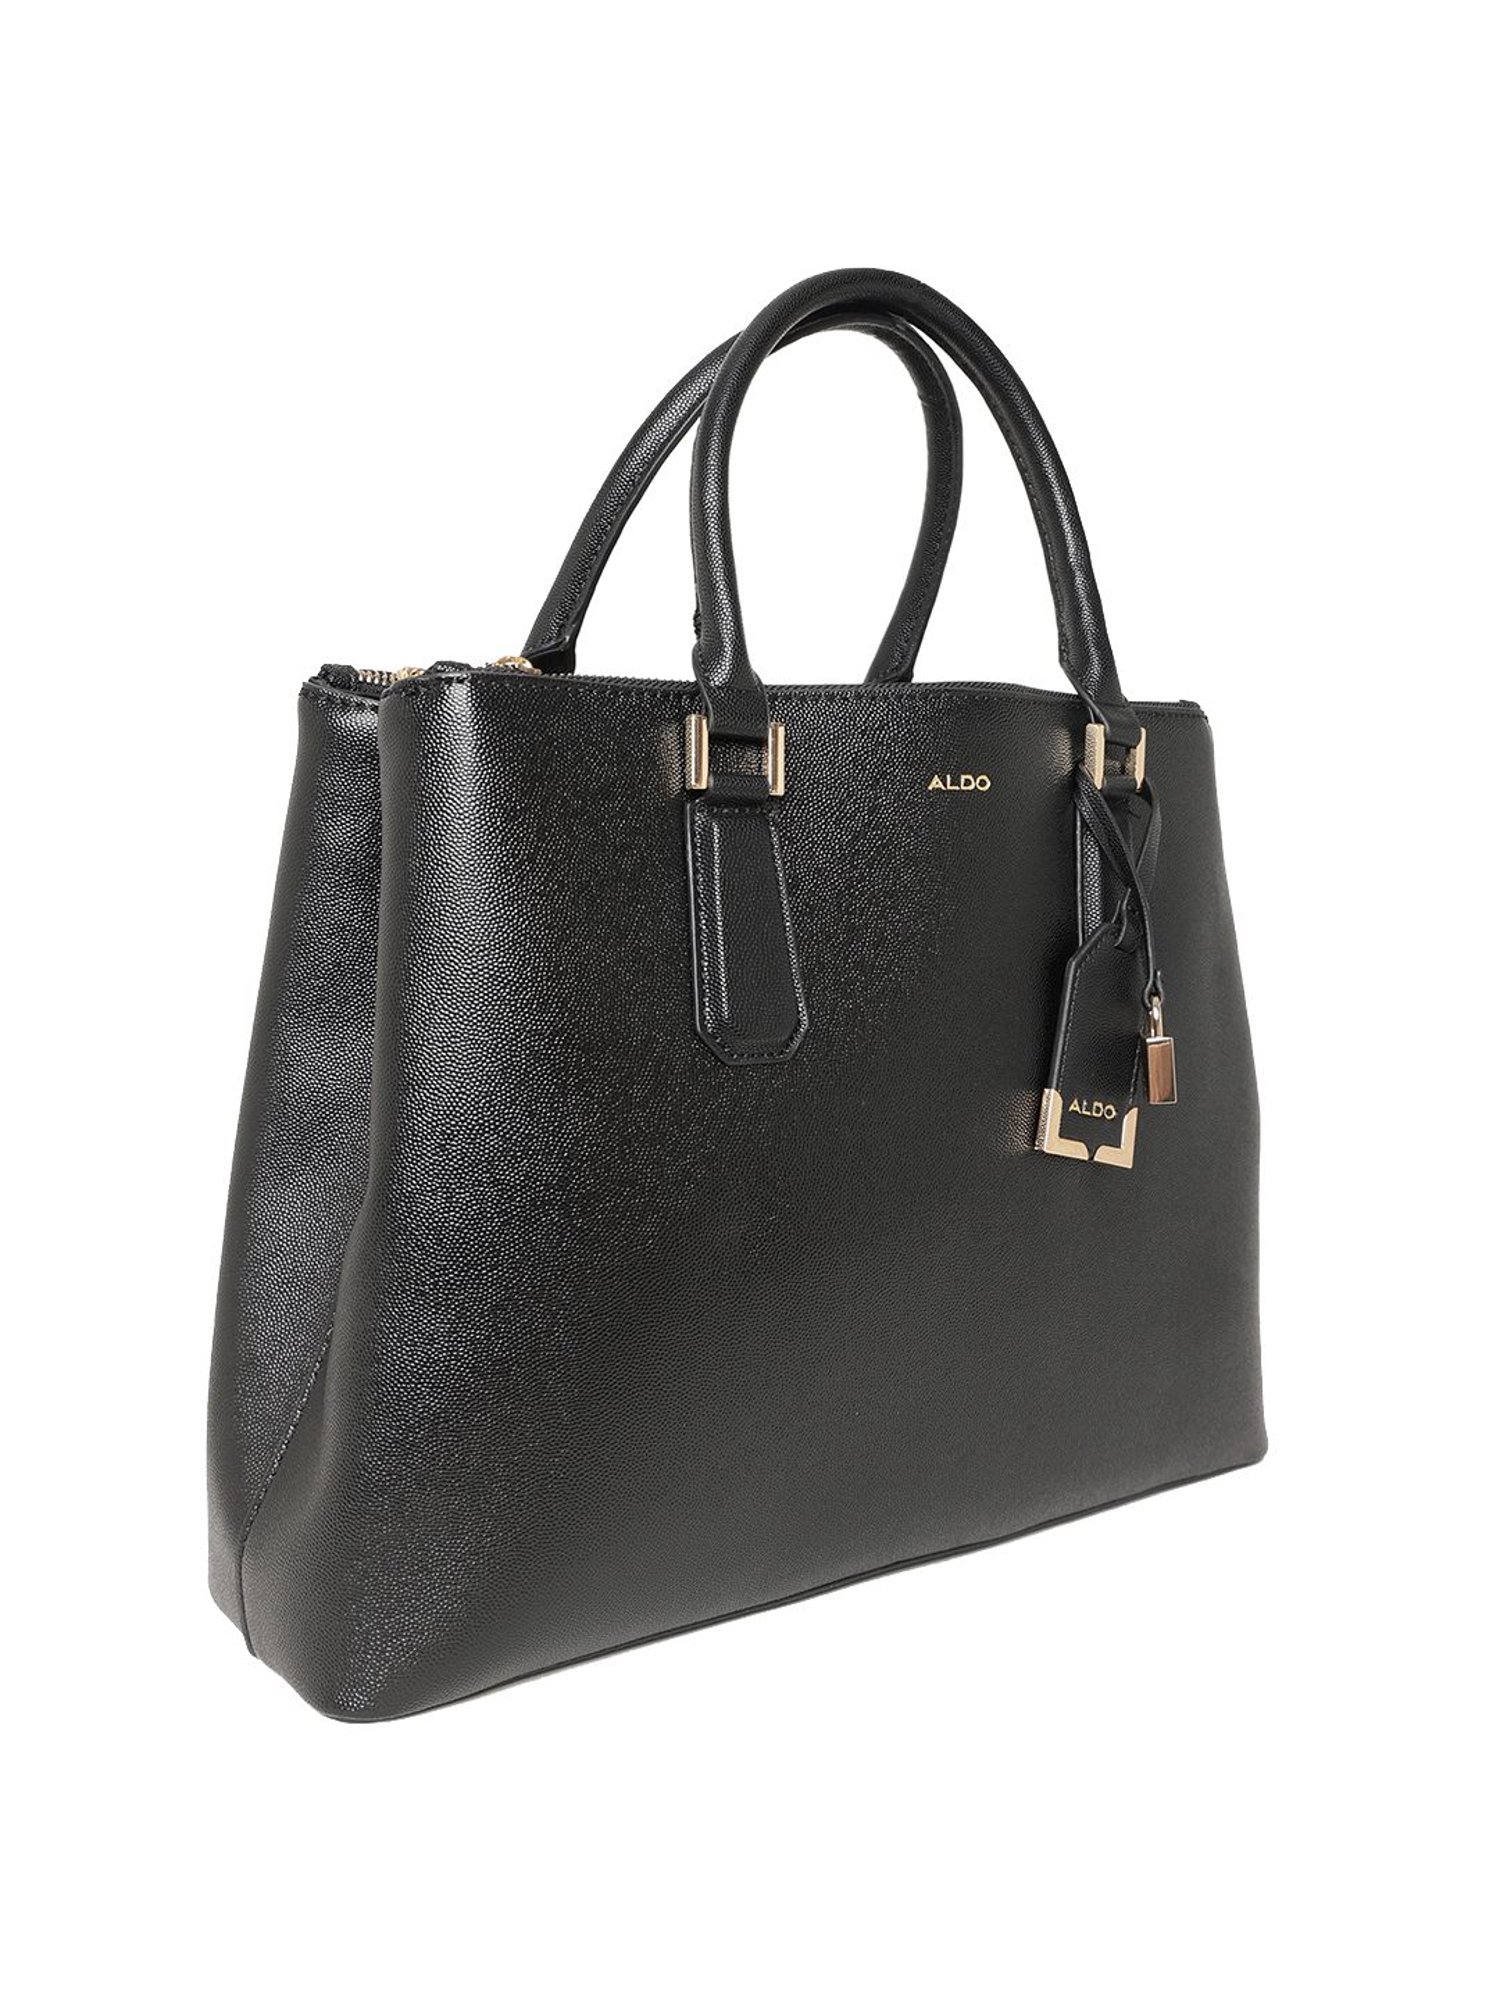 ALDO Gilliam Black Handbag Purse Gold Lock & Key | Black handbags, Handbag,  Purses